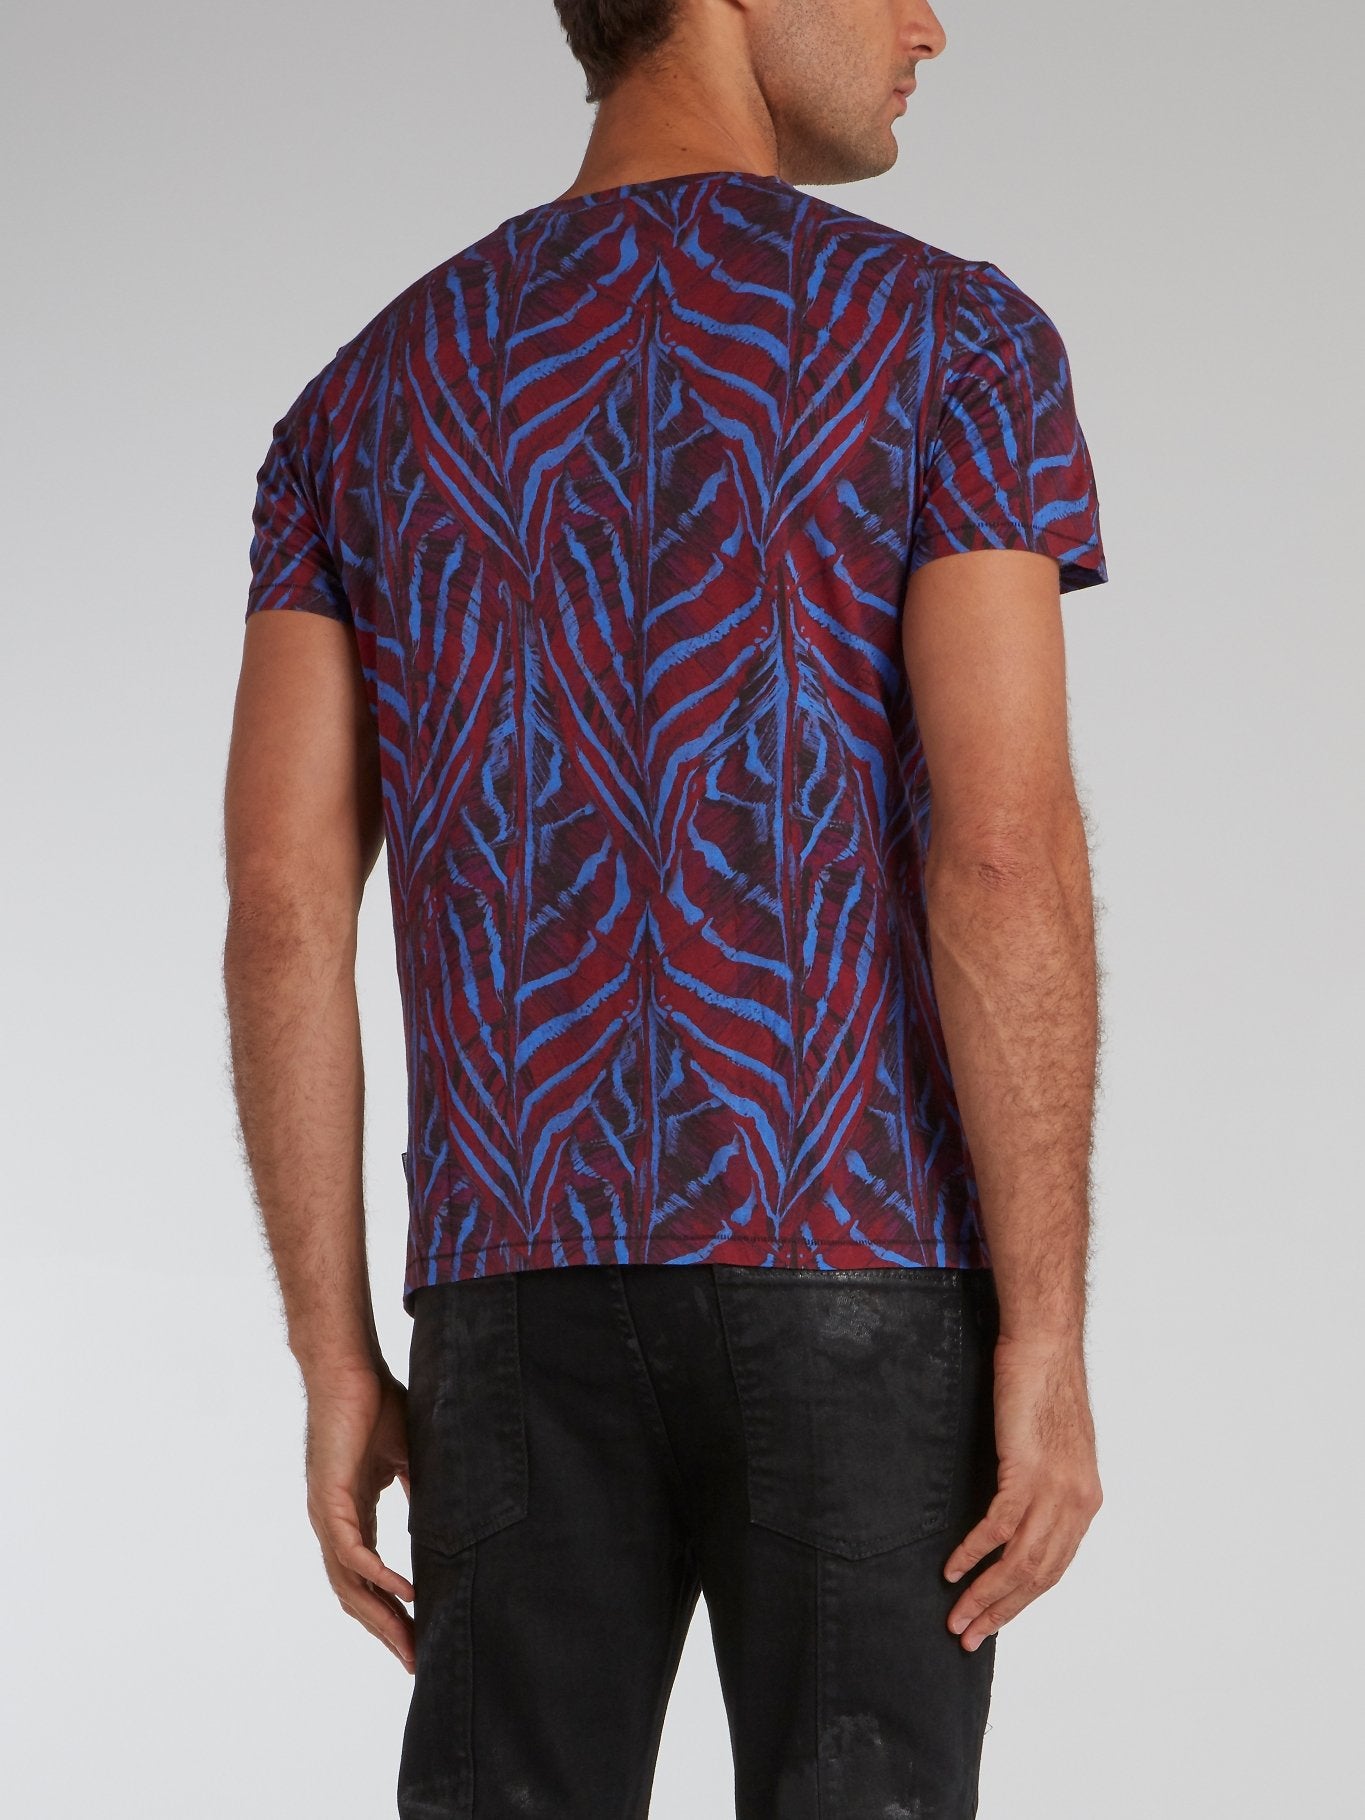 Purple Jacquard Pattern T-Shirt